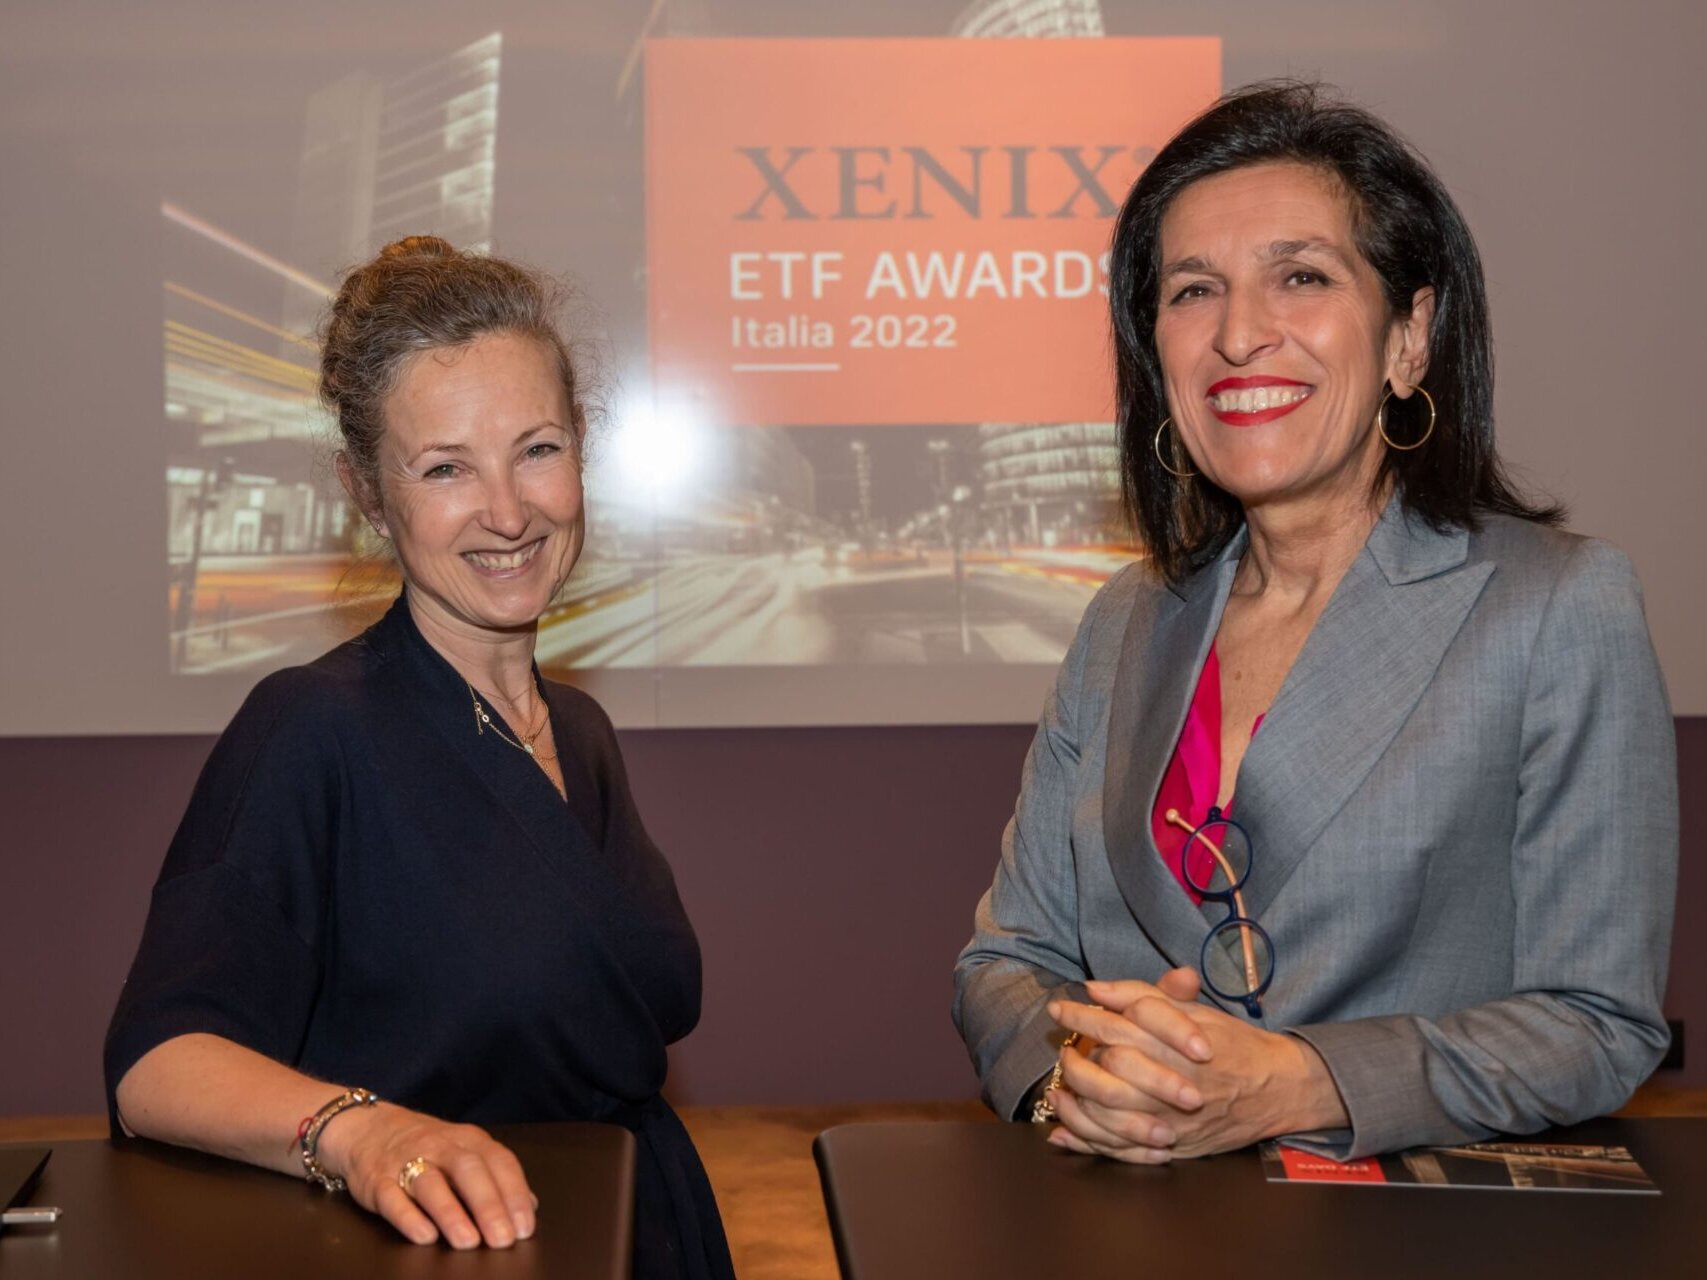 XENIX ETF Awards Italia